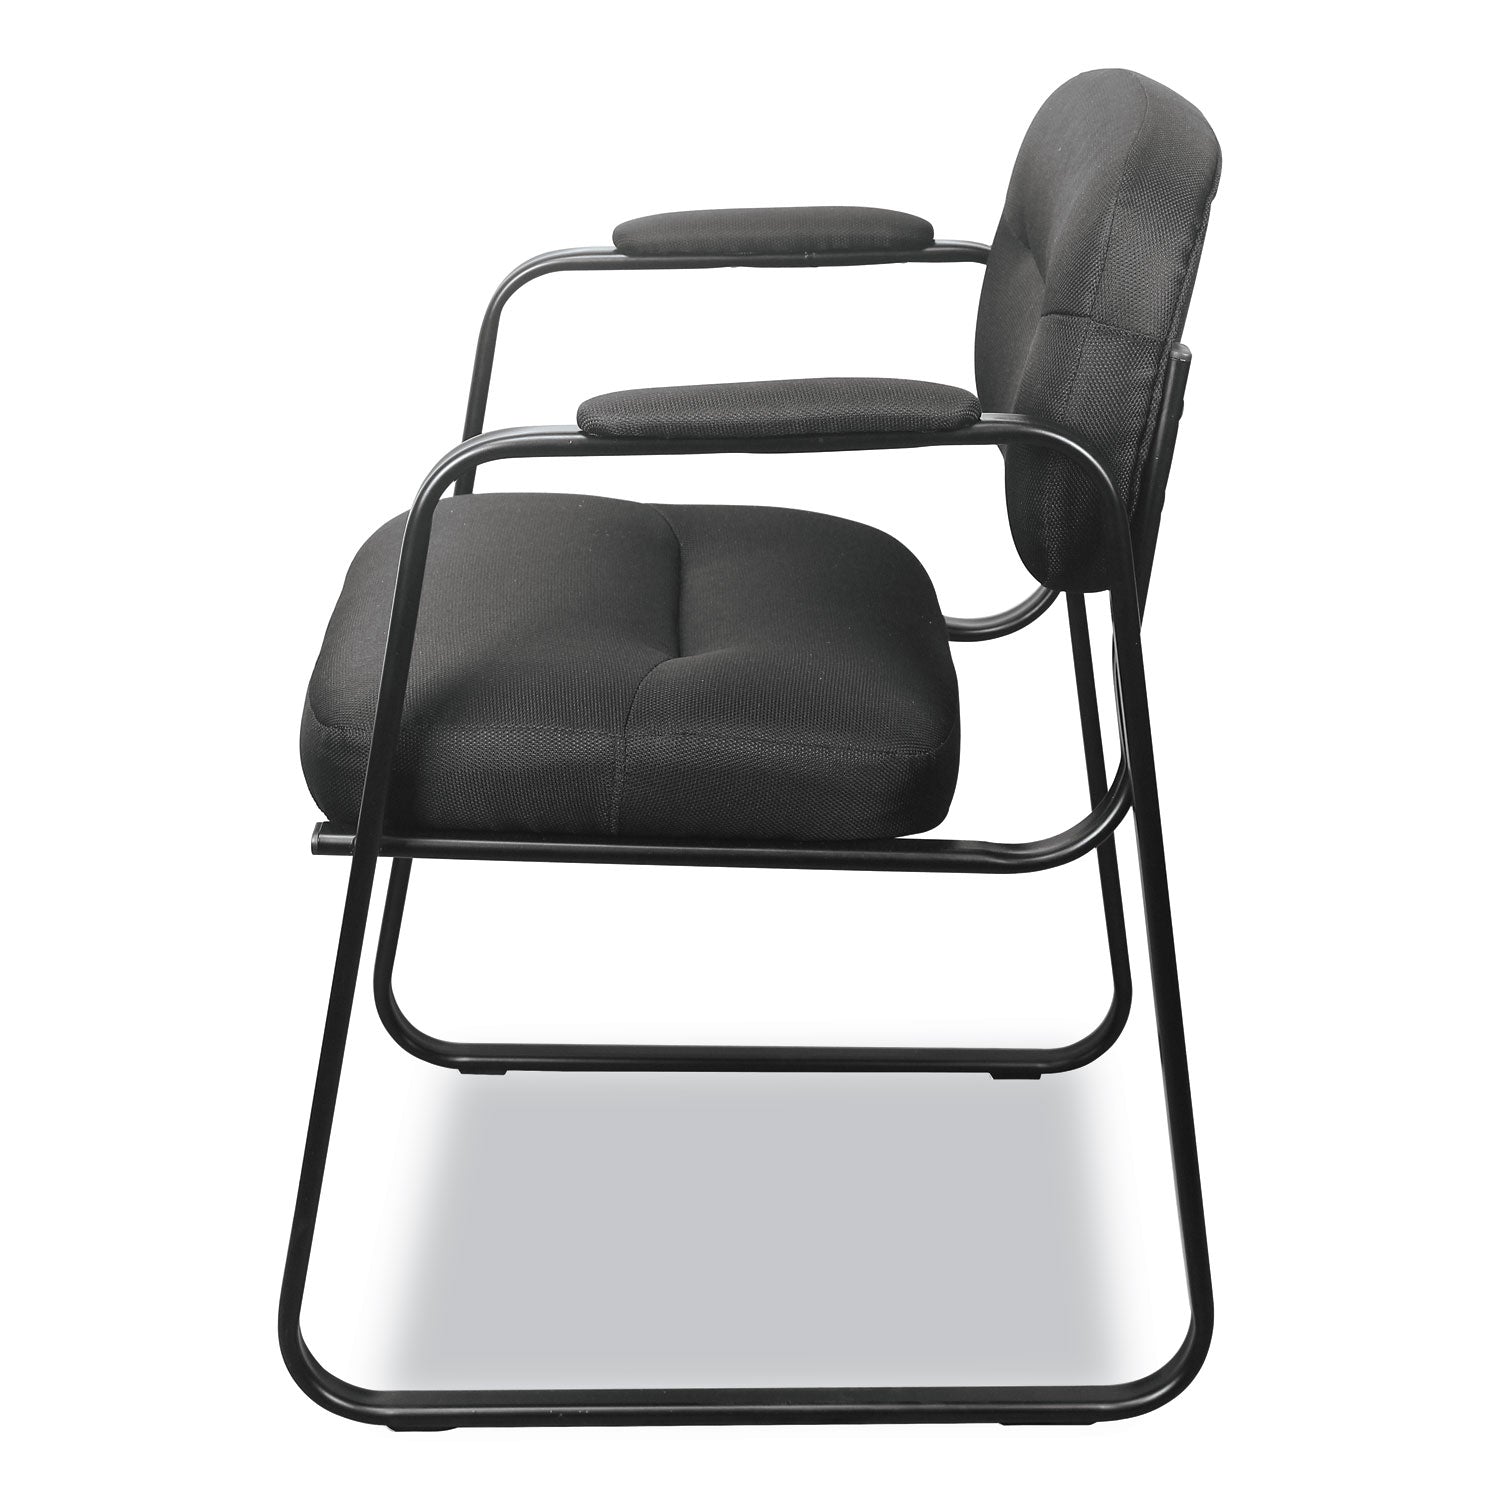 HVL653 SofThread Bonded Leather Guest Chair, 22.25" x 23" x 32", Black Seat, Black Back, Black Base - 